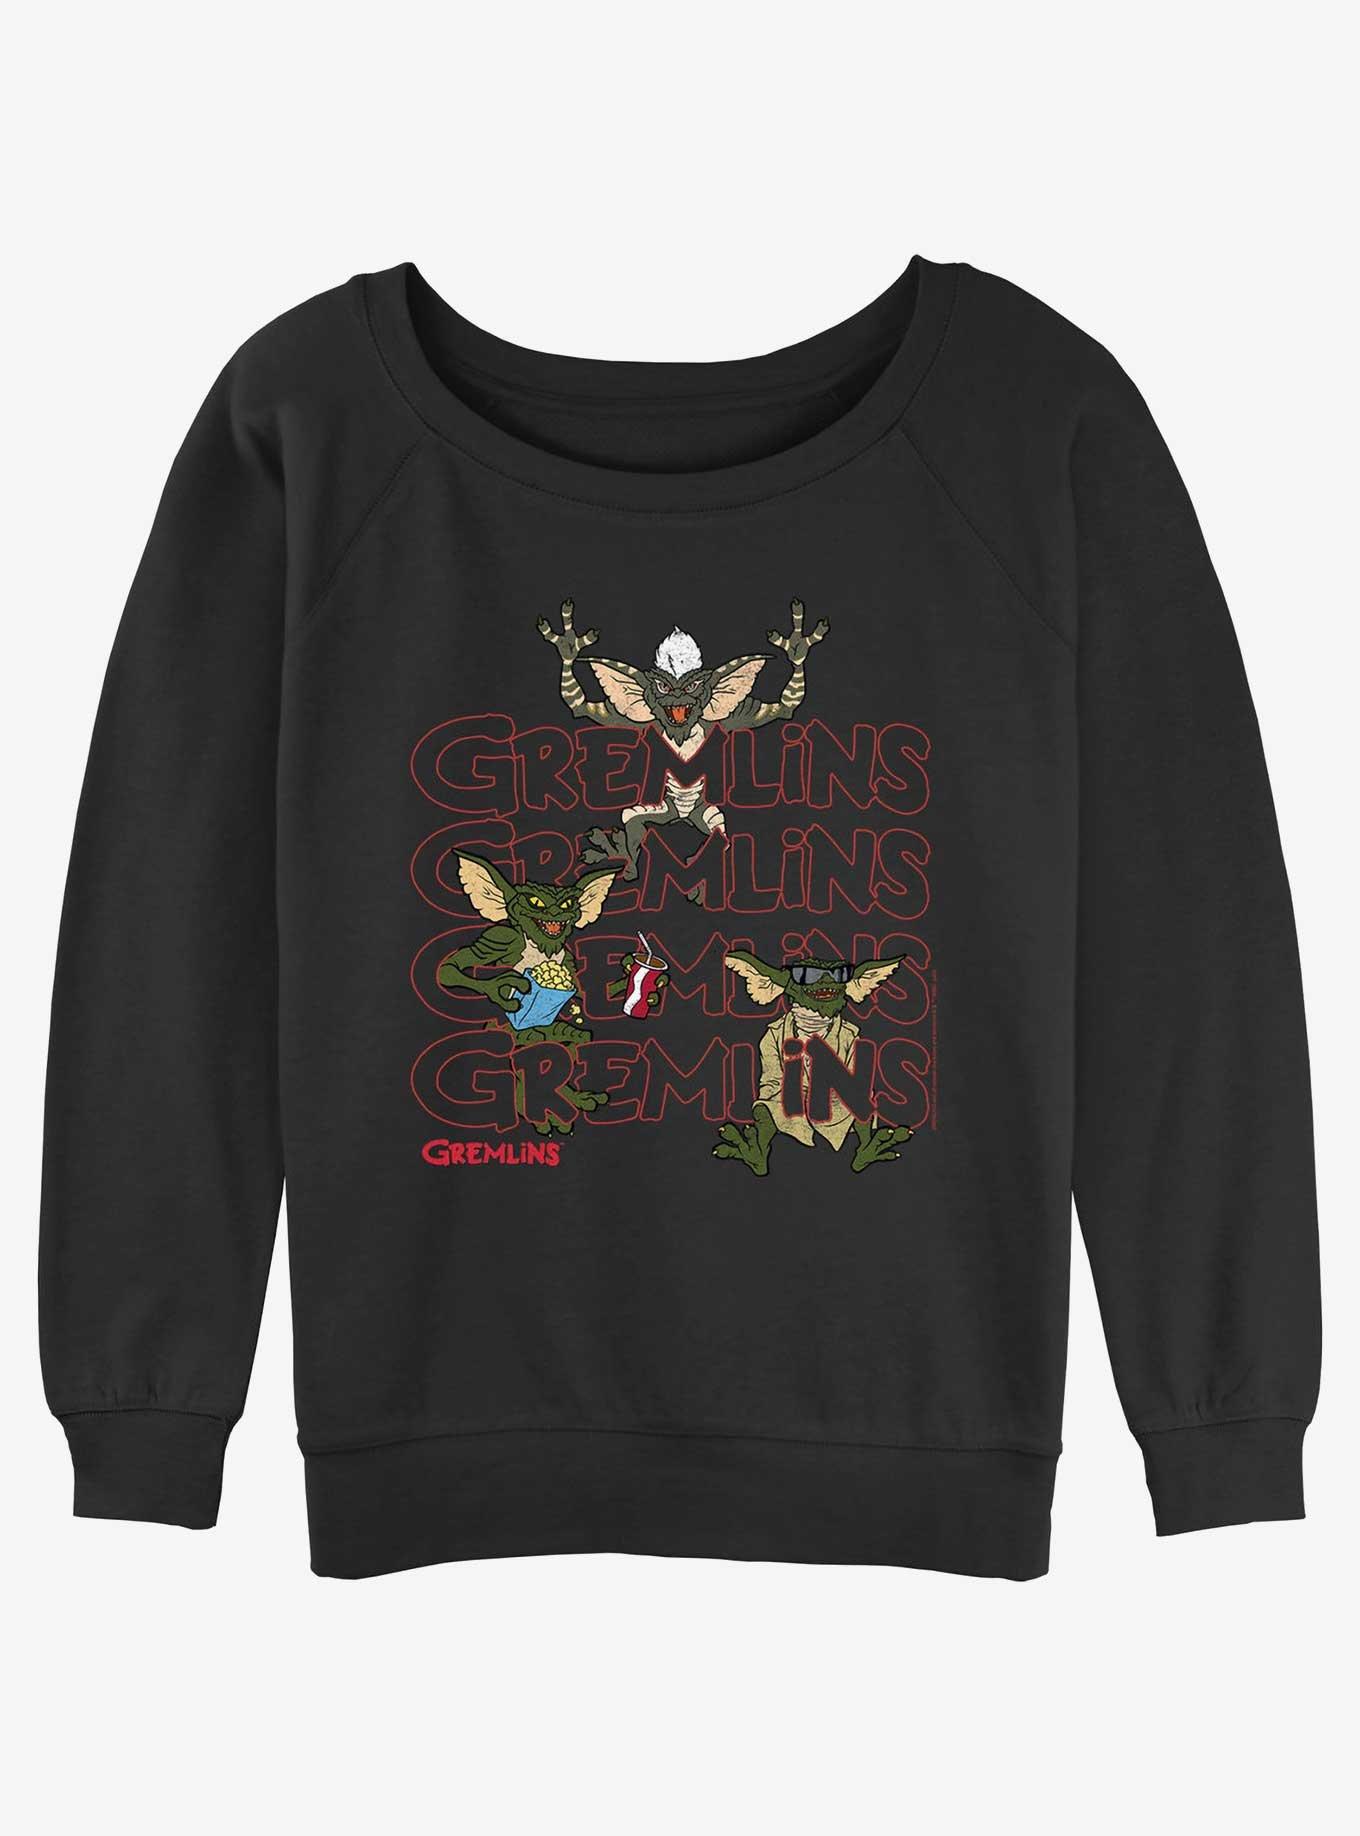 Gremlins Gremlin Crawl Girls Slouchy Sweatshirt, BLACK, hi-res